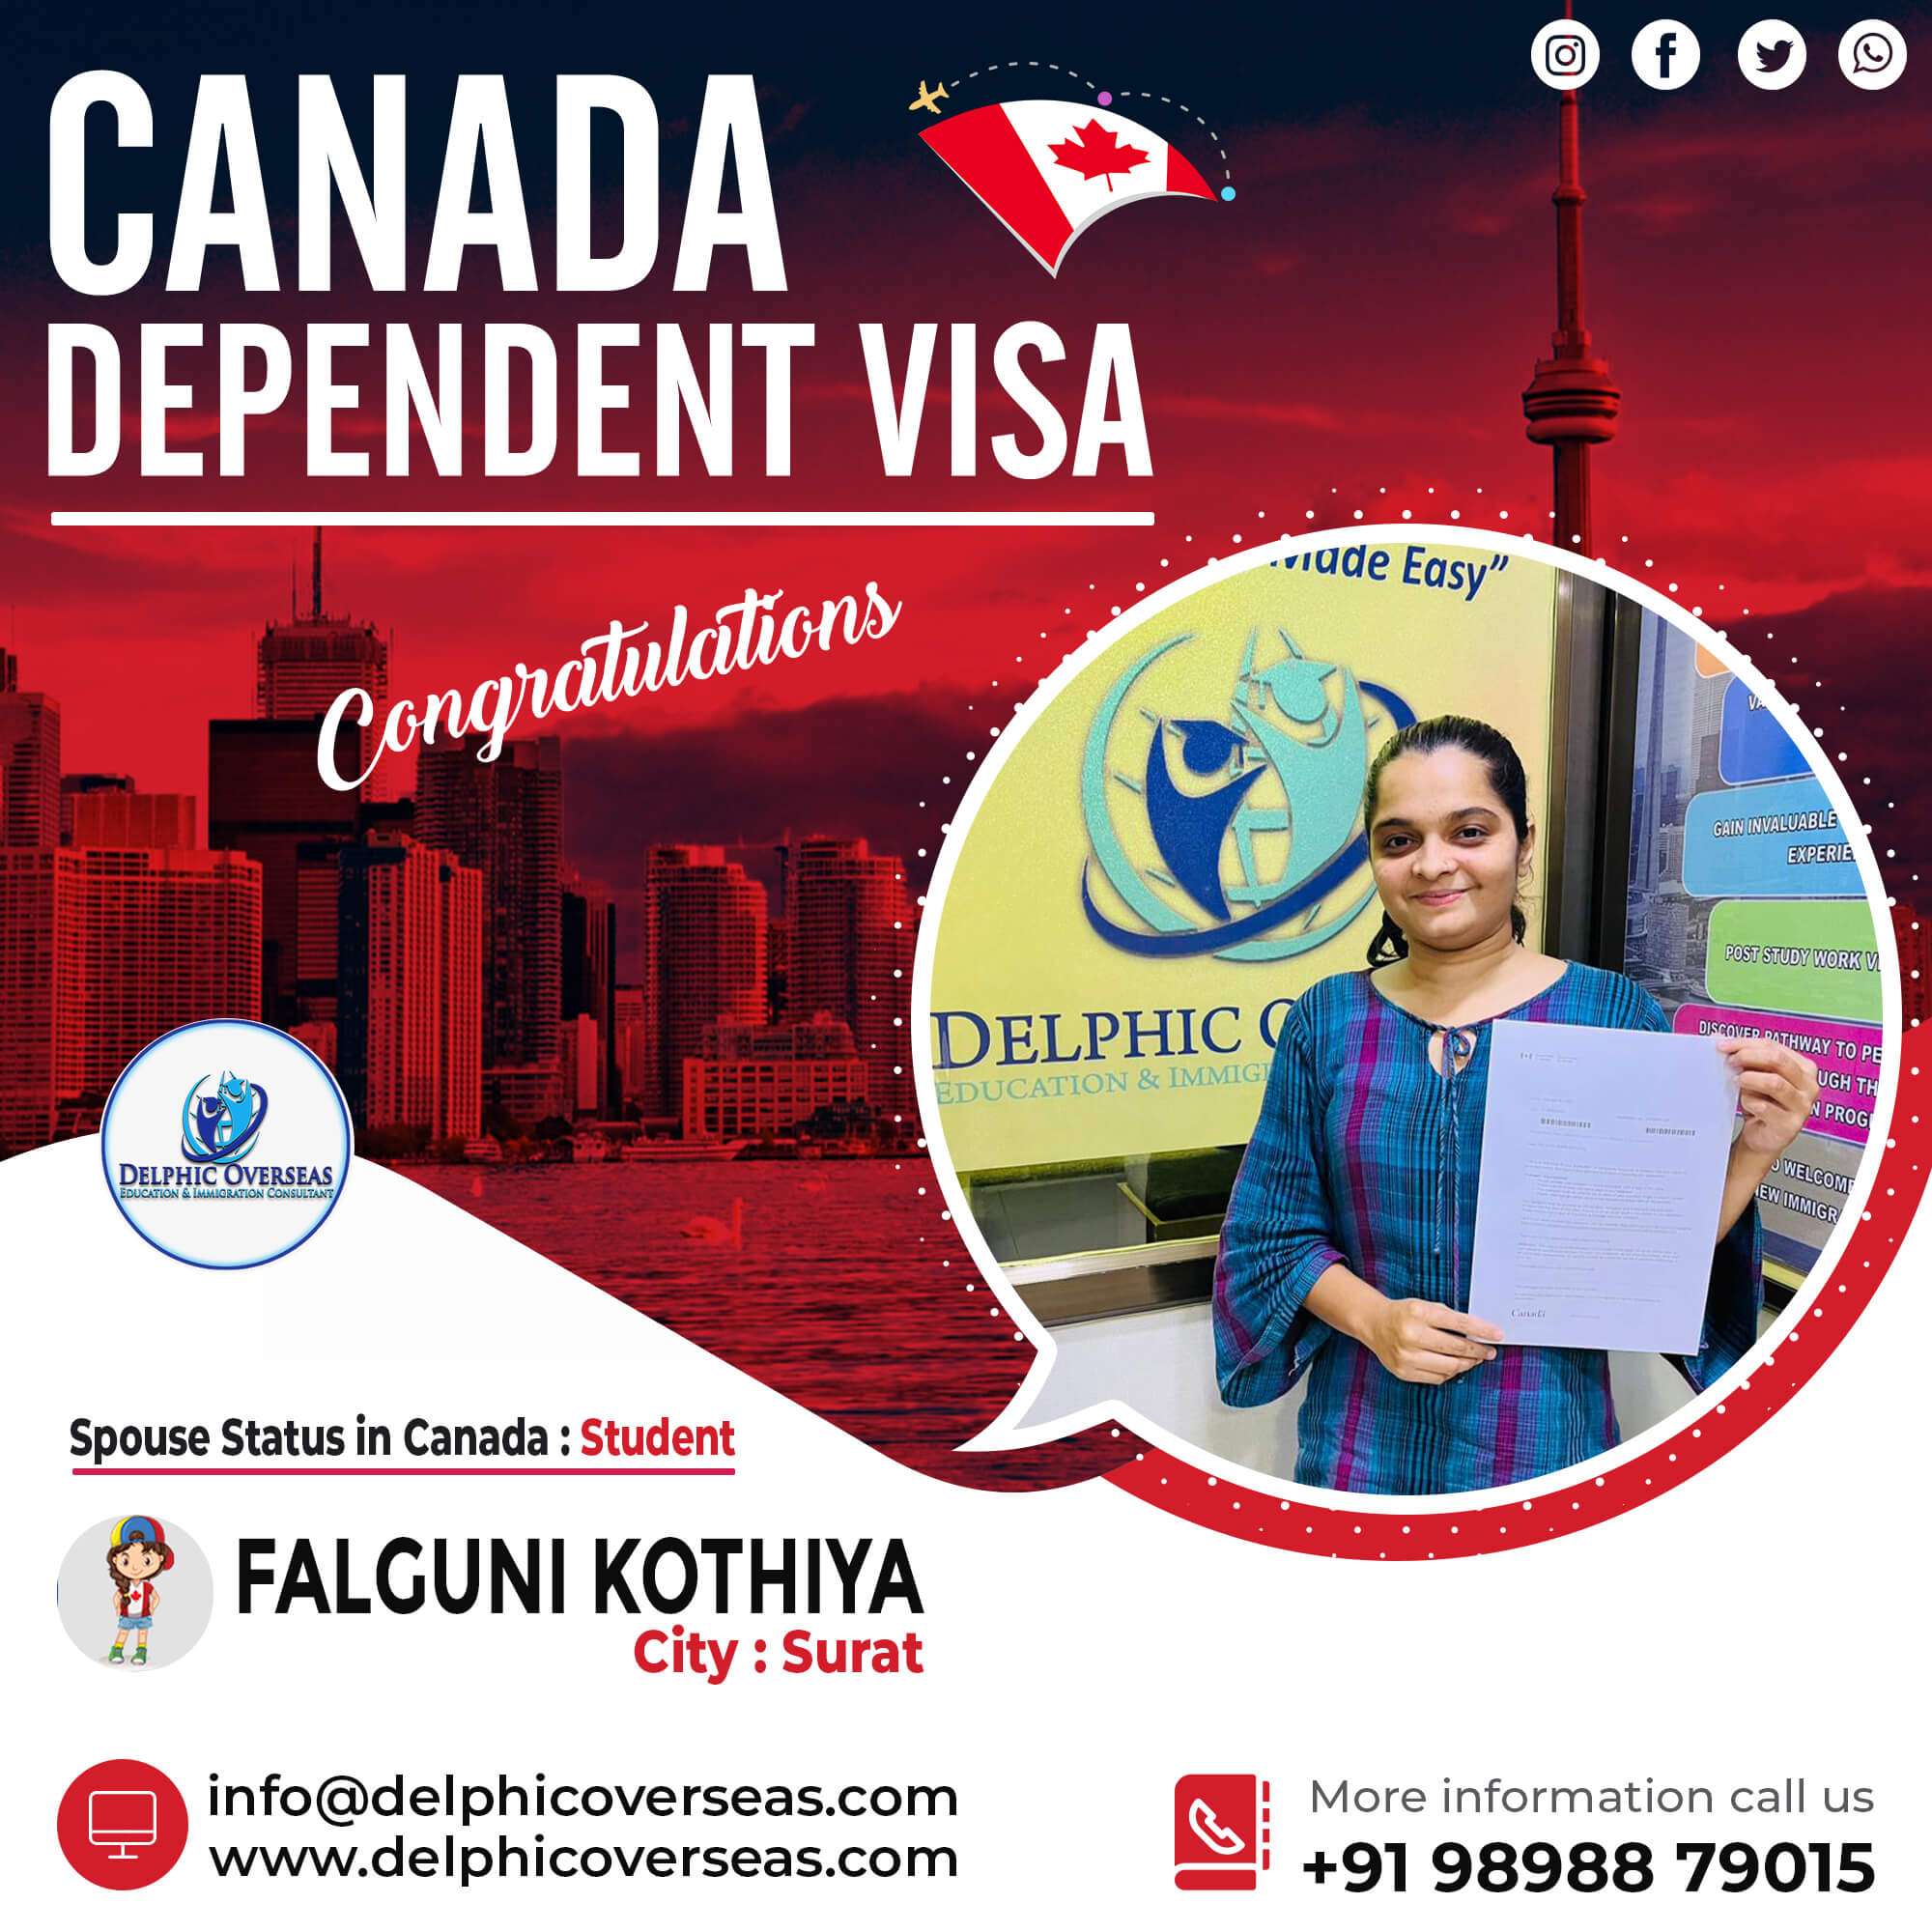 Falguni Kothiya Canada Dependent Visa Success Story